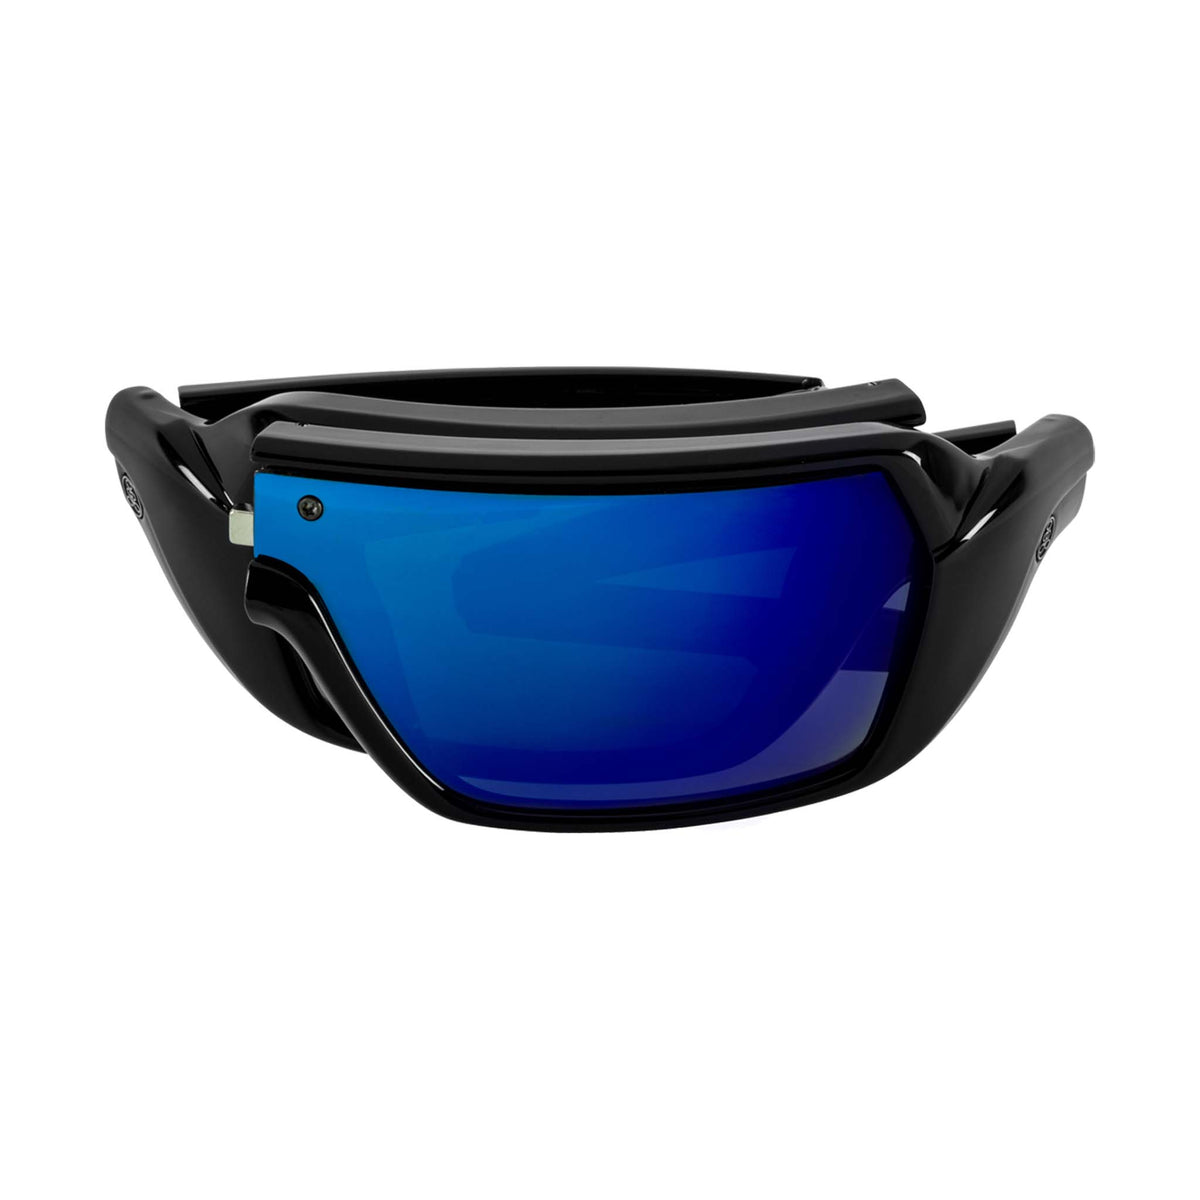 Popticals, Premium Compact Sunglasses, PopStorm, 010060-BGUO, Standard Sunglasses, Gloss Black Frame, Gray Lenses w/Blue Mirror Finish, Compact View